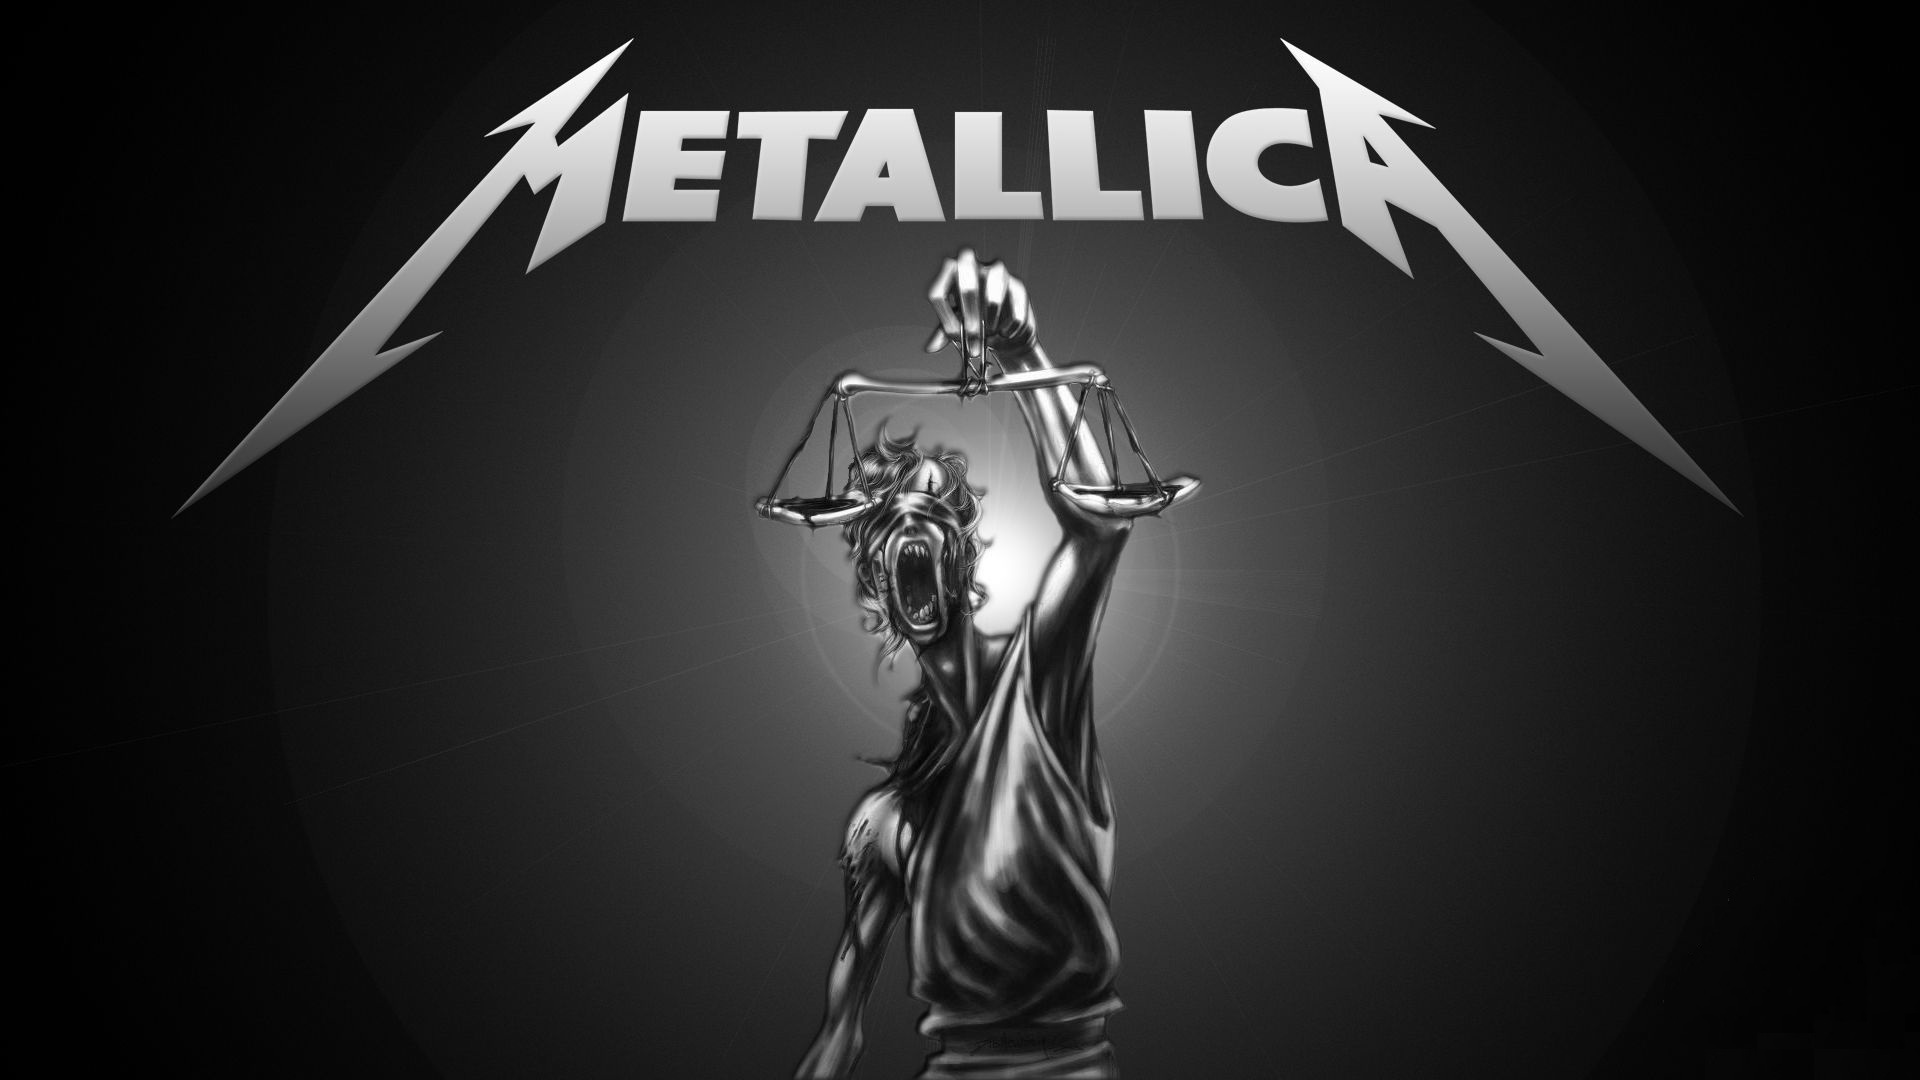 Metallica Wallpaper Image Photos Pictures Background